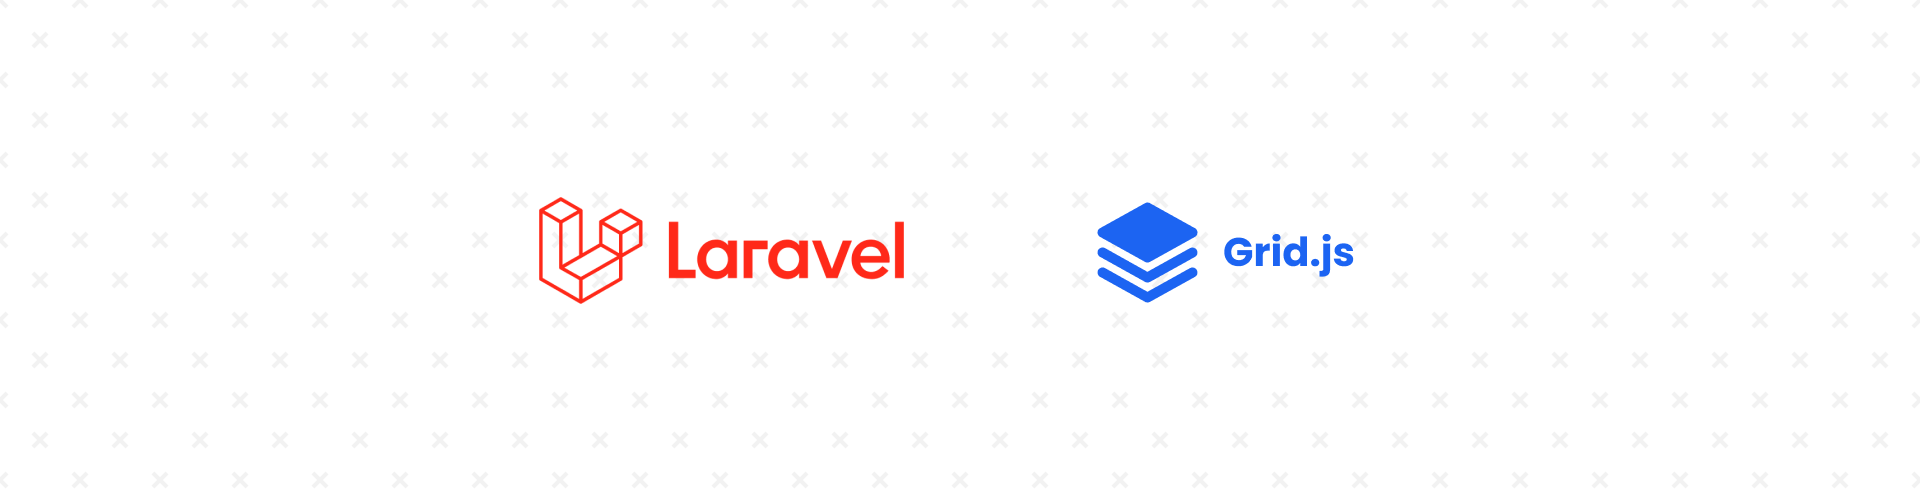 Laravel and Grid.js Blogpost Image